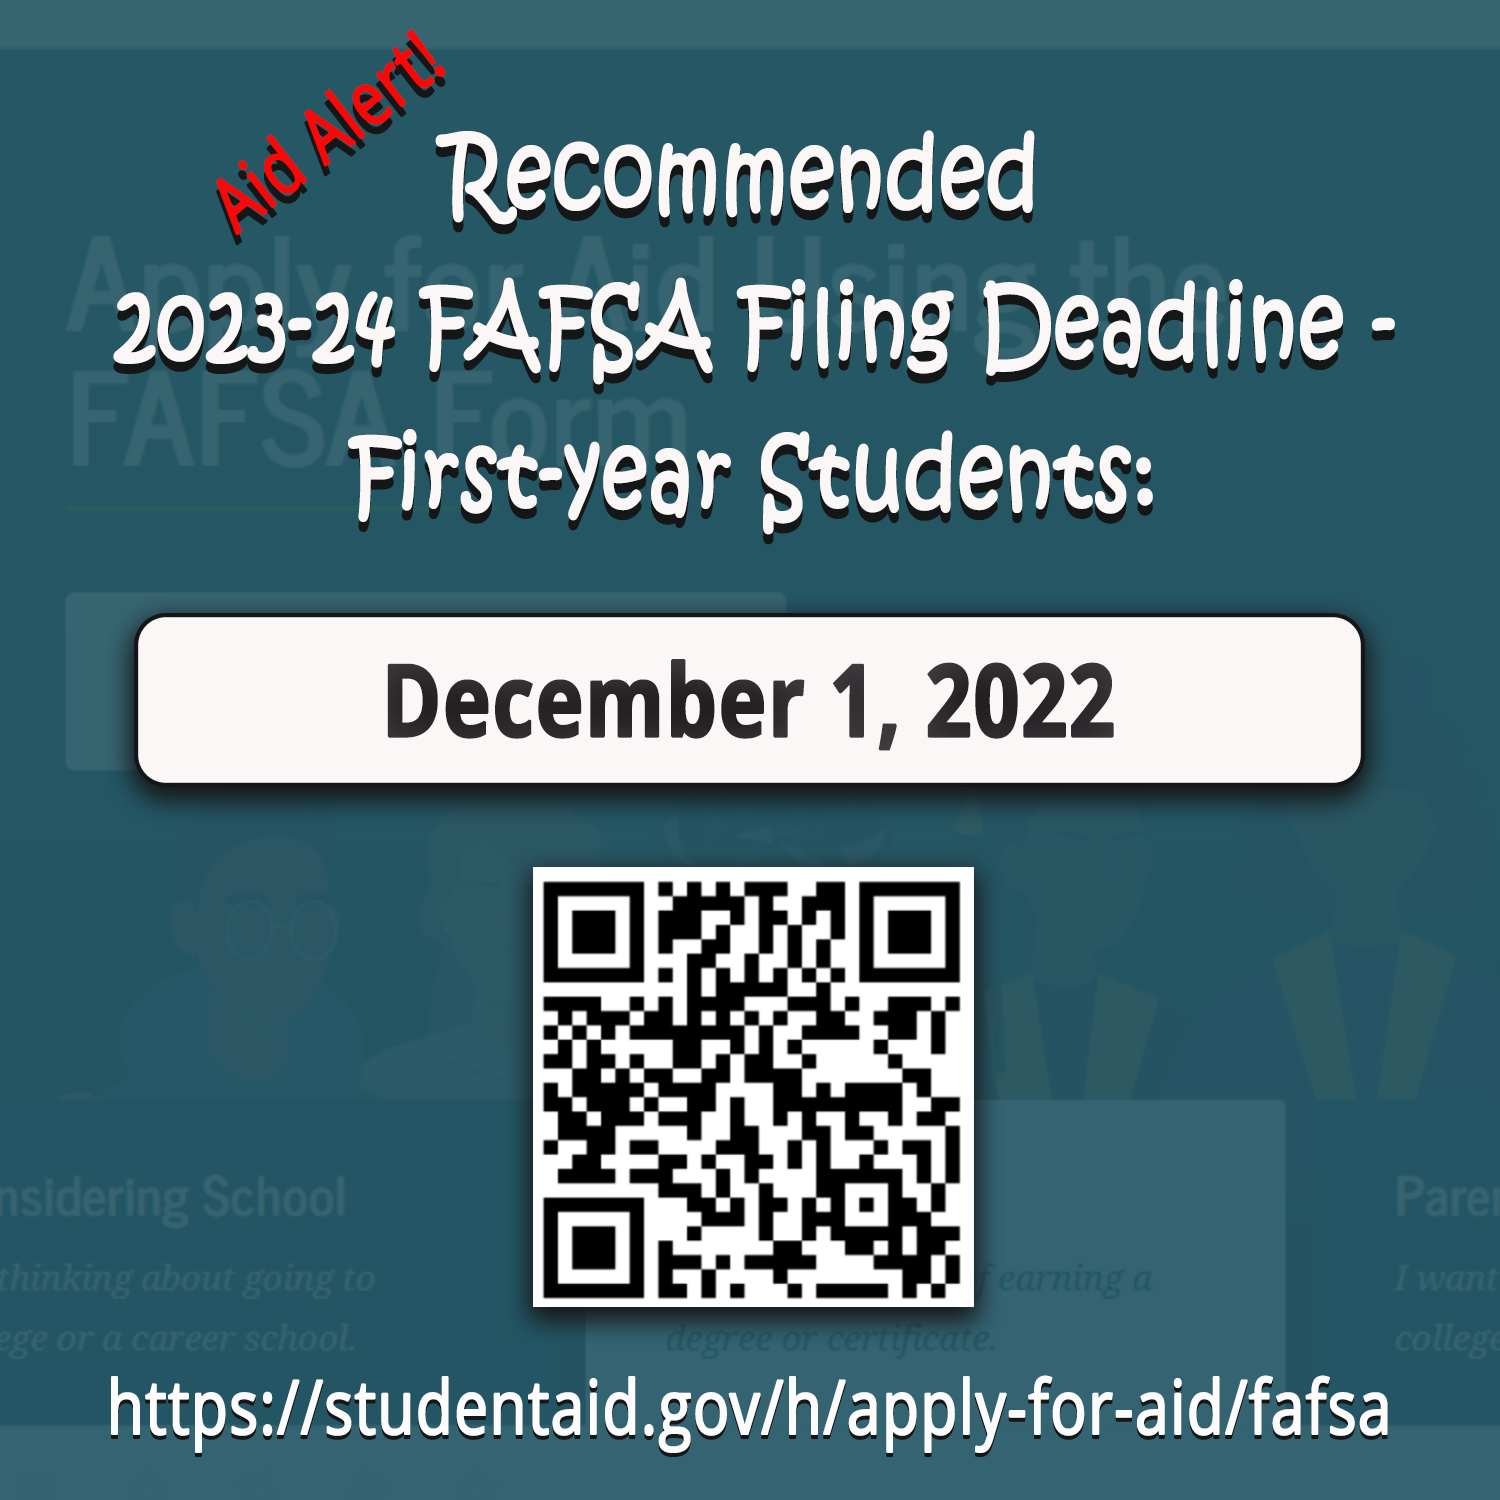 FAFSA Filing Deadline - First-year students December 1.